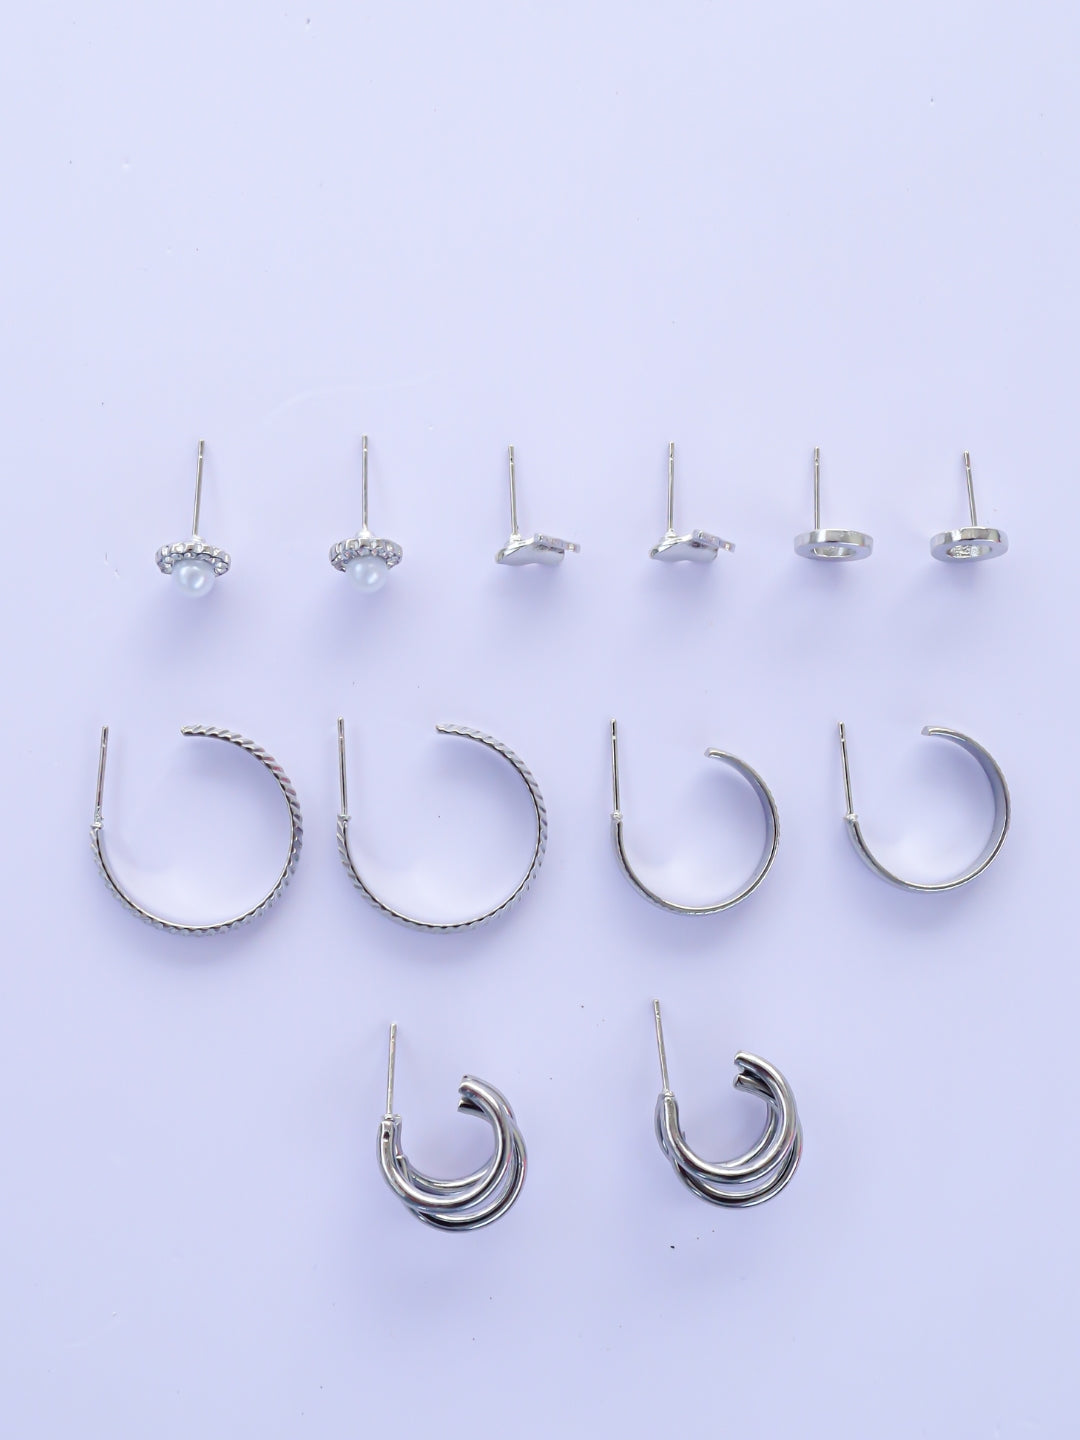 Opulent Harmony Silver Earrings combo - Zerakijewels